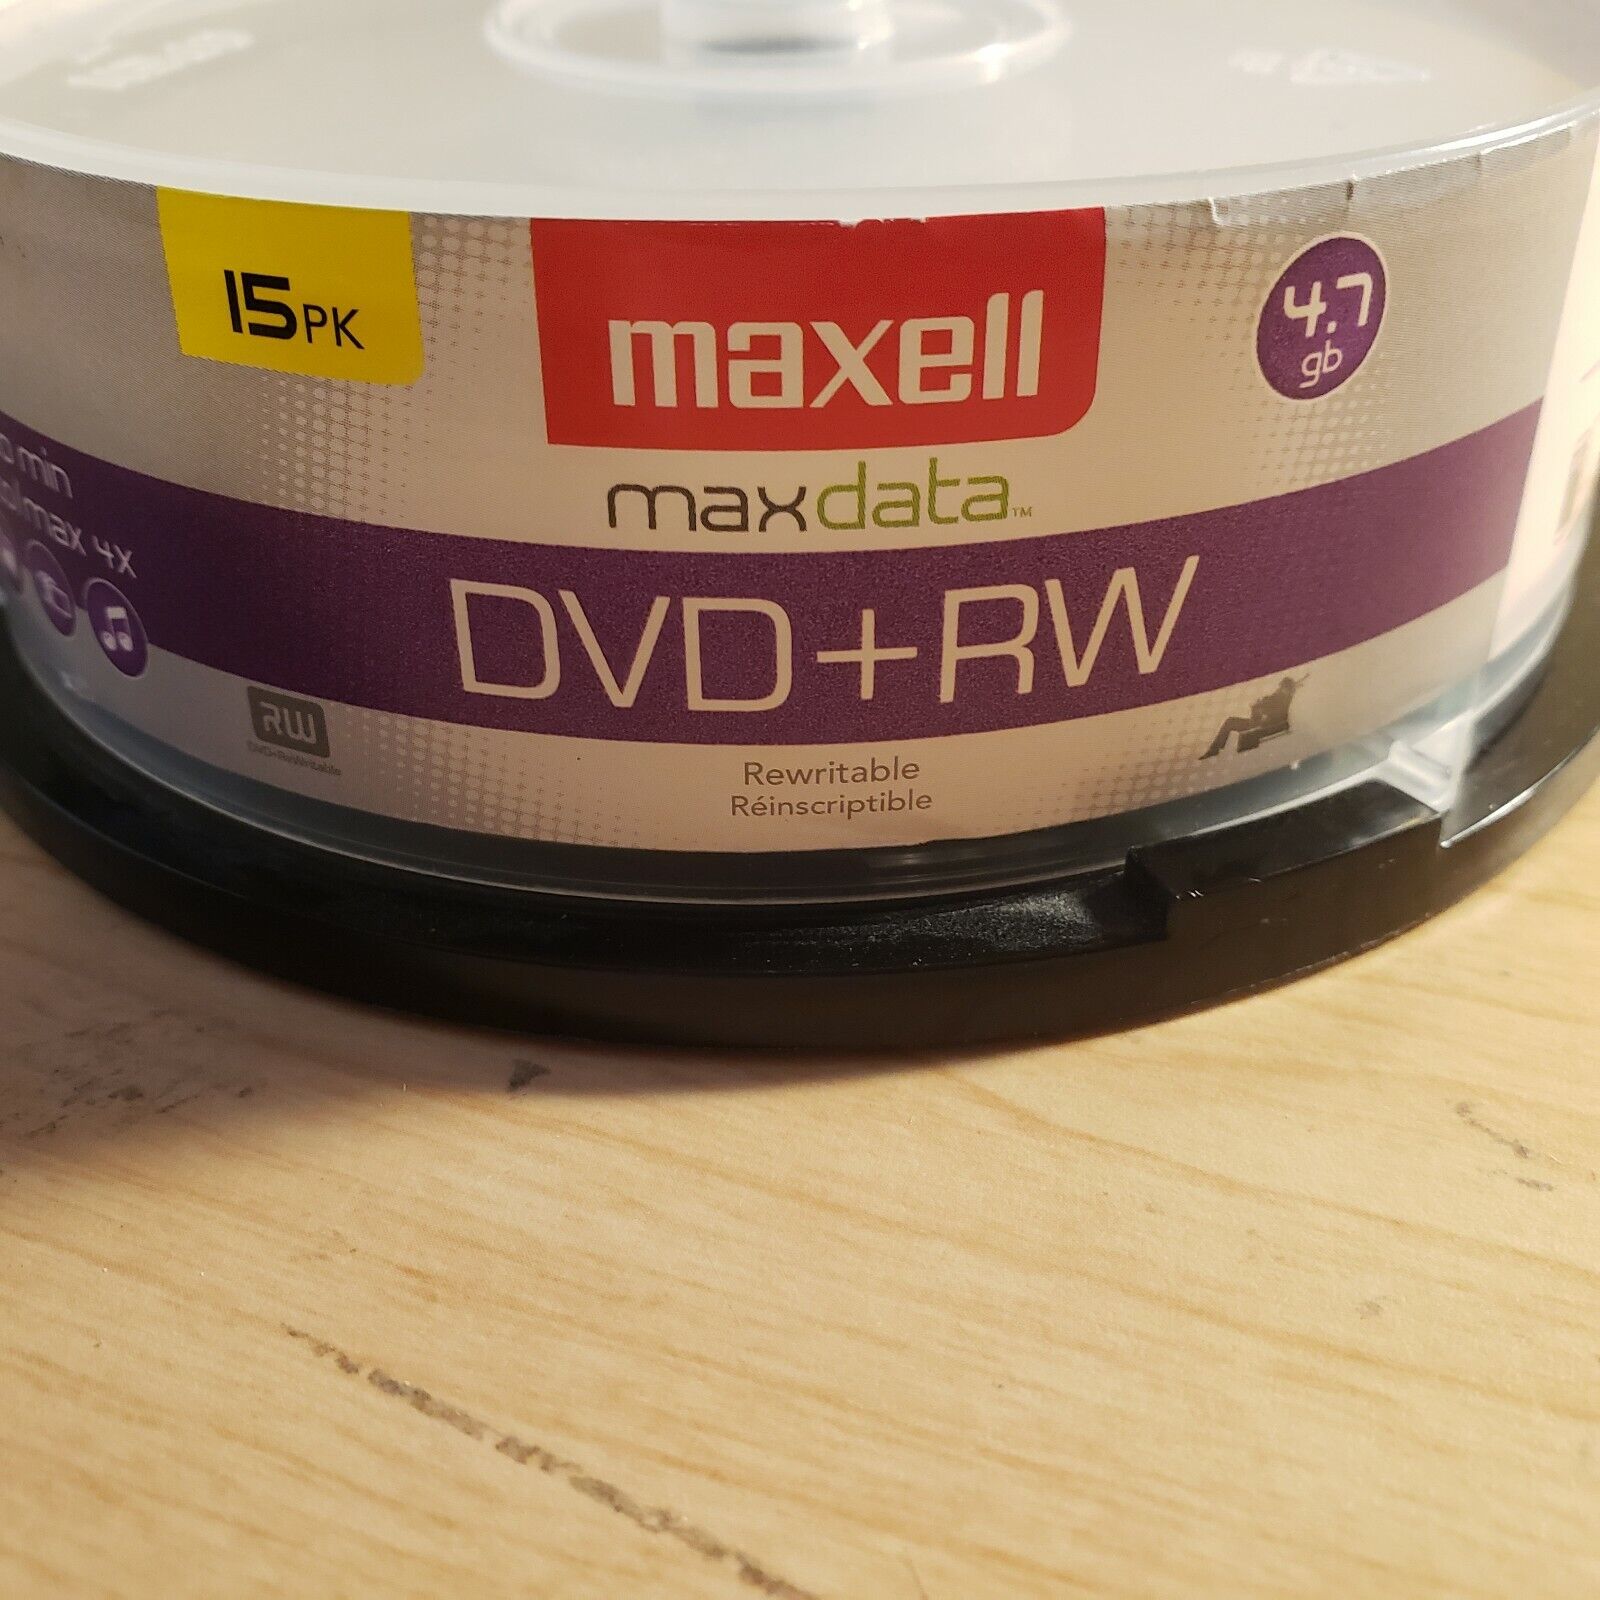 Maxell 4x DVD+RW Media - 4.7gb - 16 Pack Ships Free Next Day